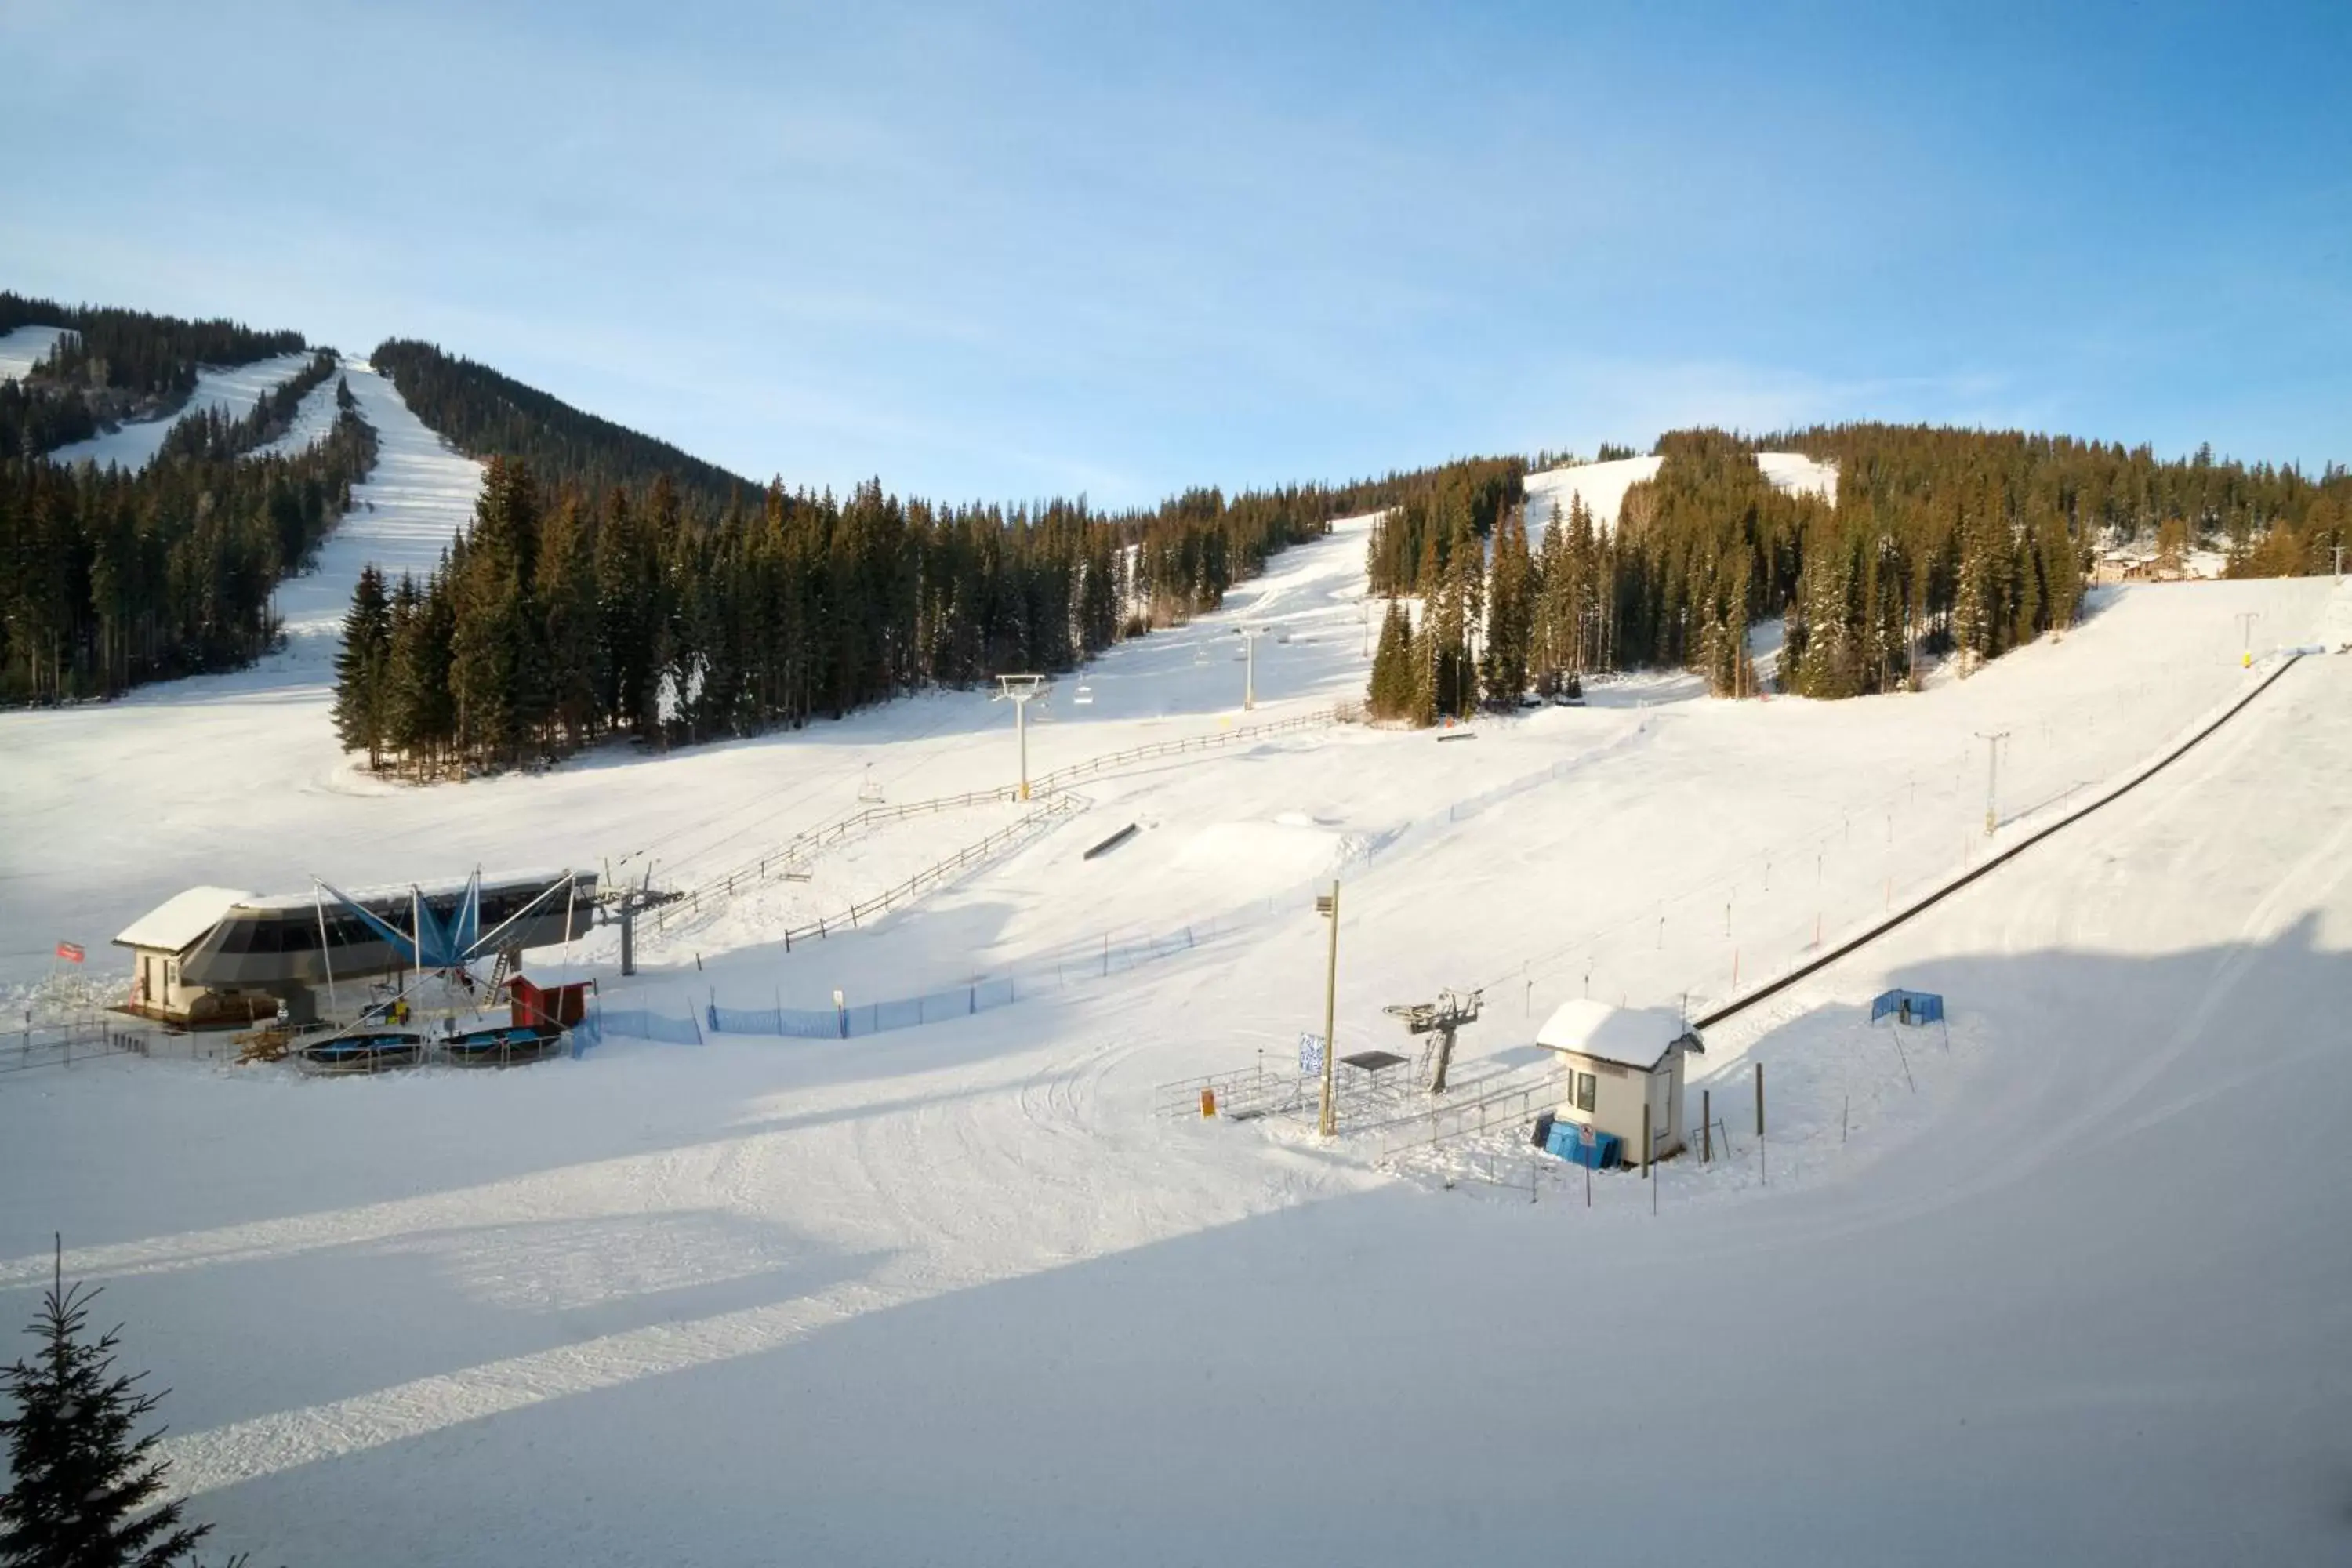 Area and facilities, Winter in Sundance Lodge